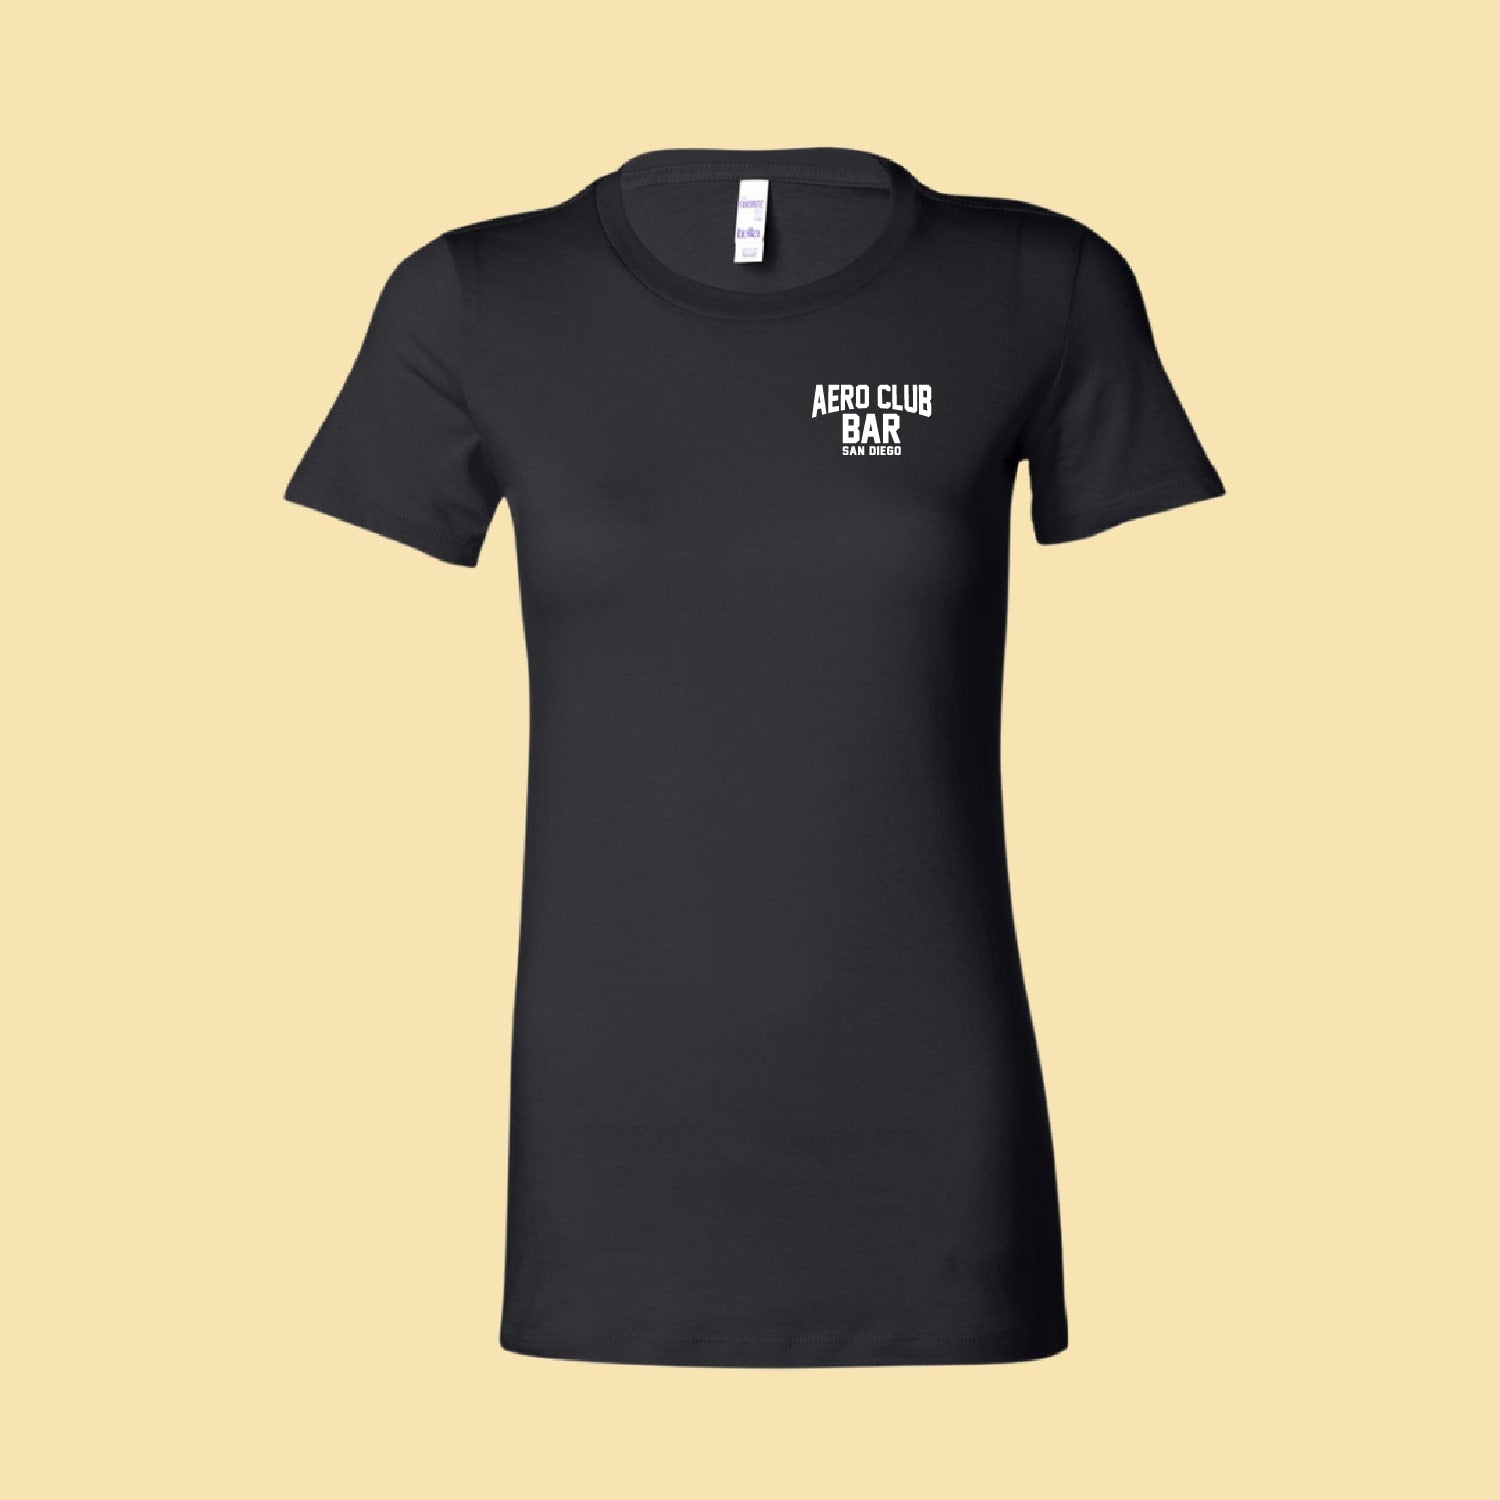 Aero Club Bar 100% cotton women's black t-shirt